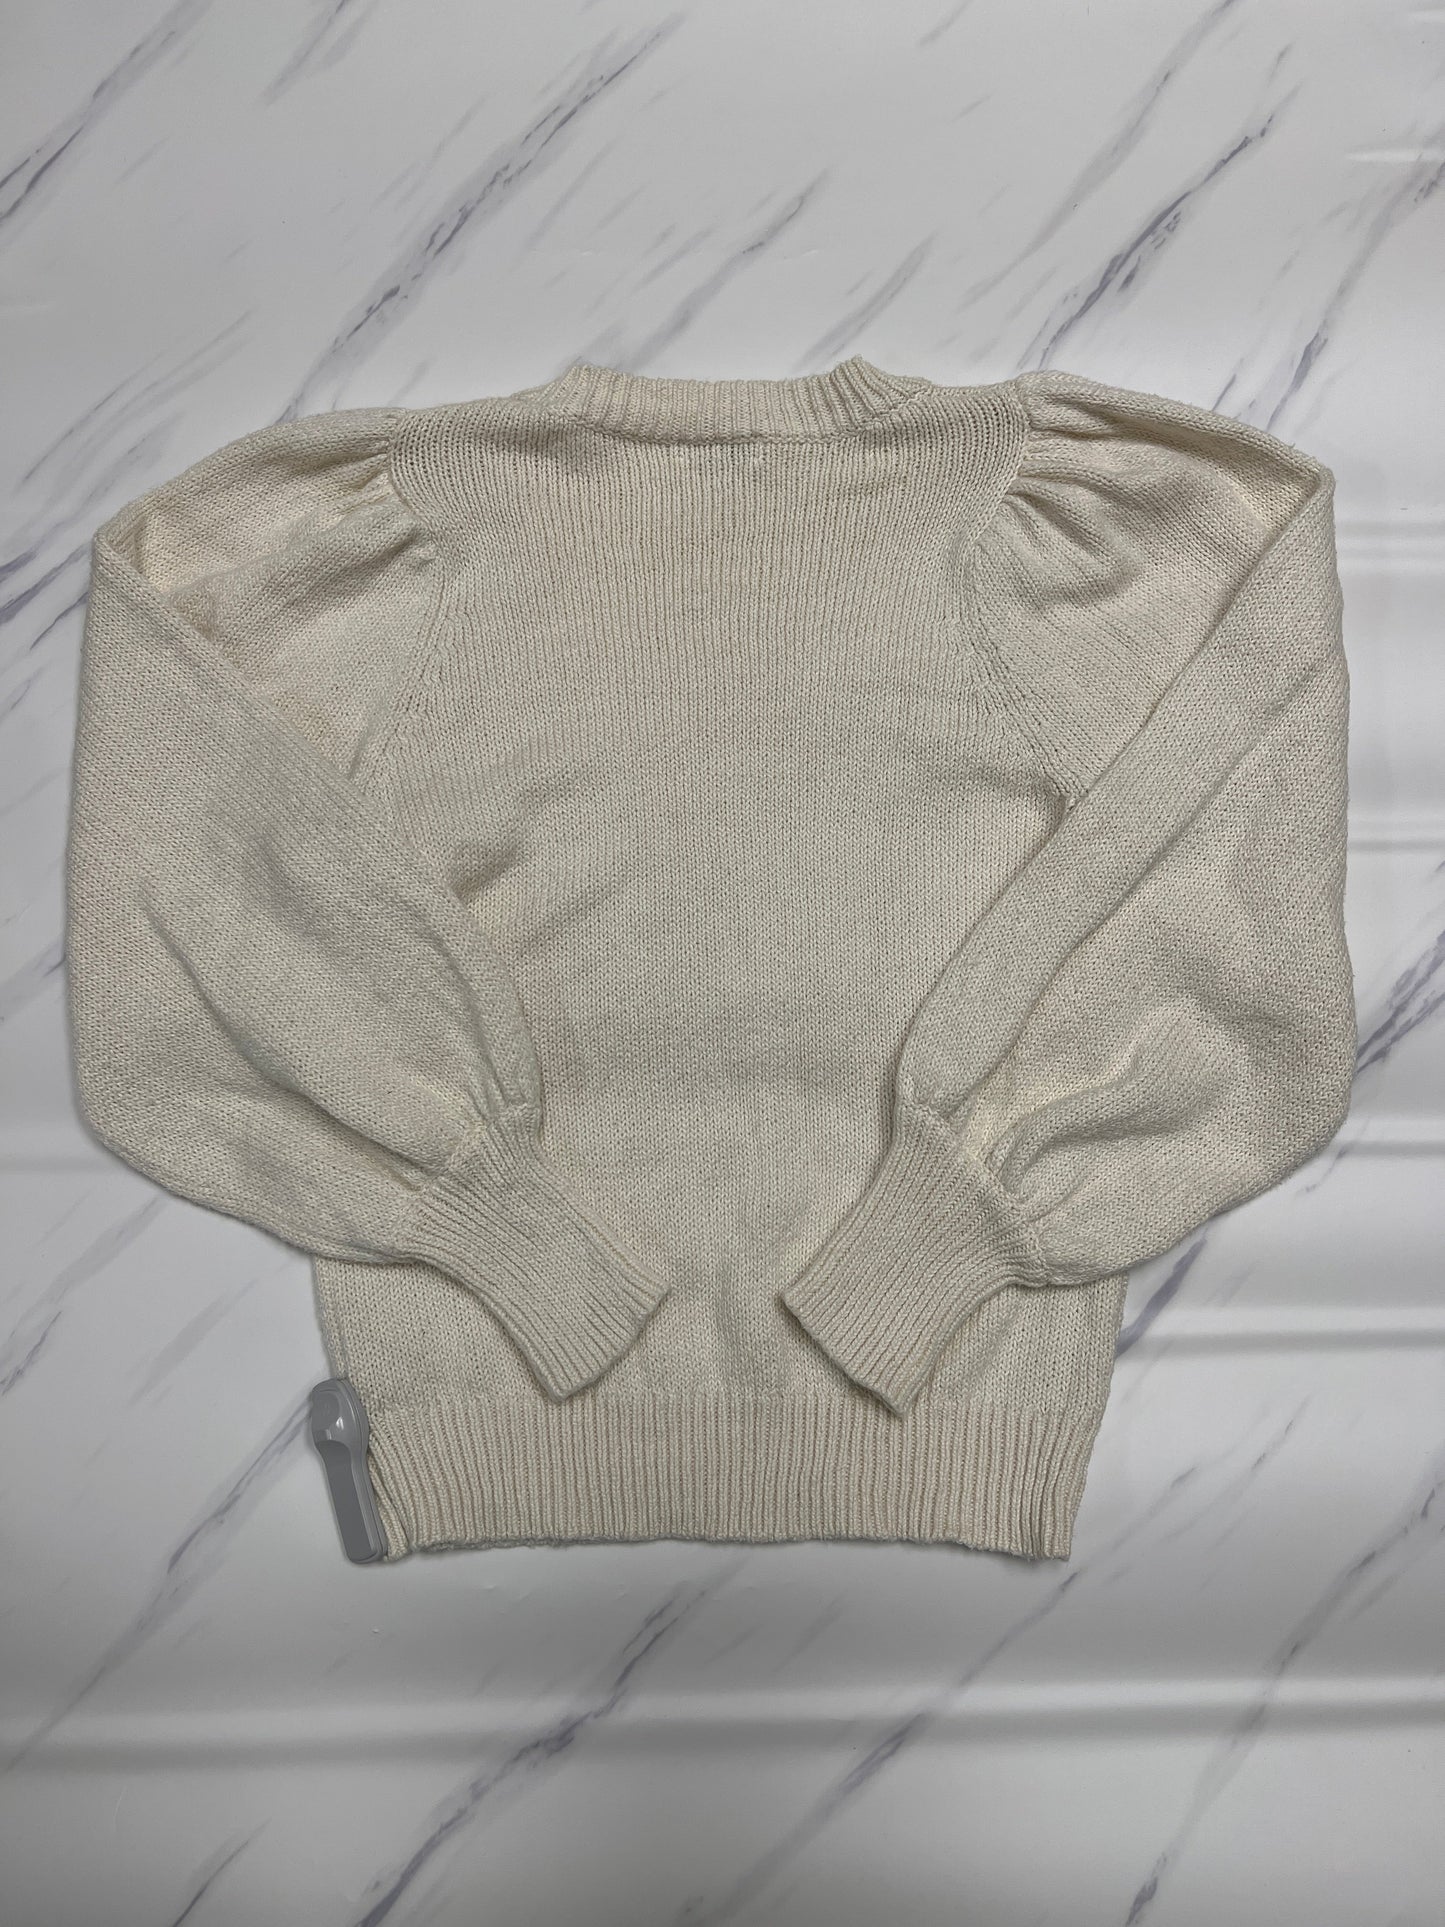 Sweater Designer By 525 America  Size: M